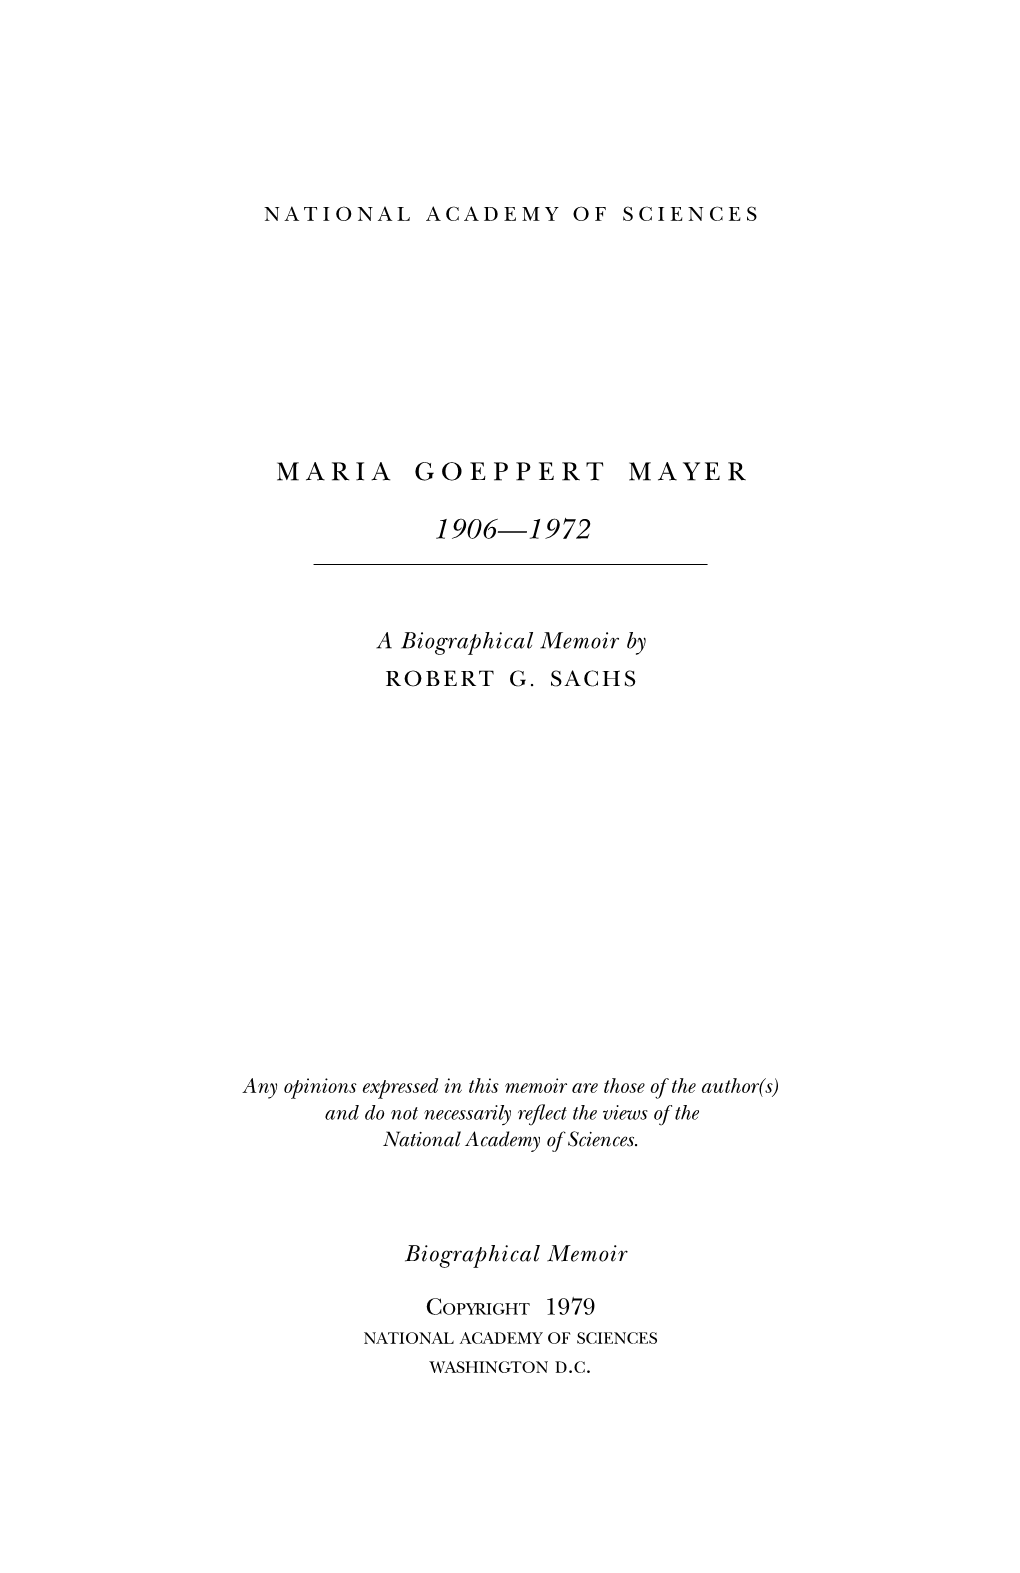 MARIA GOEPPERT MAYER June 28,1906-February 20,1972